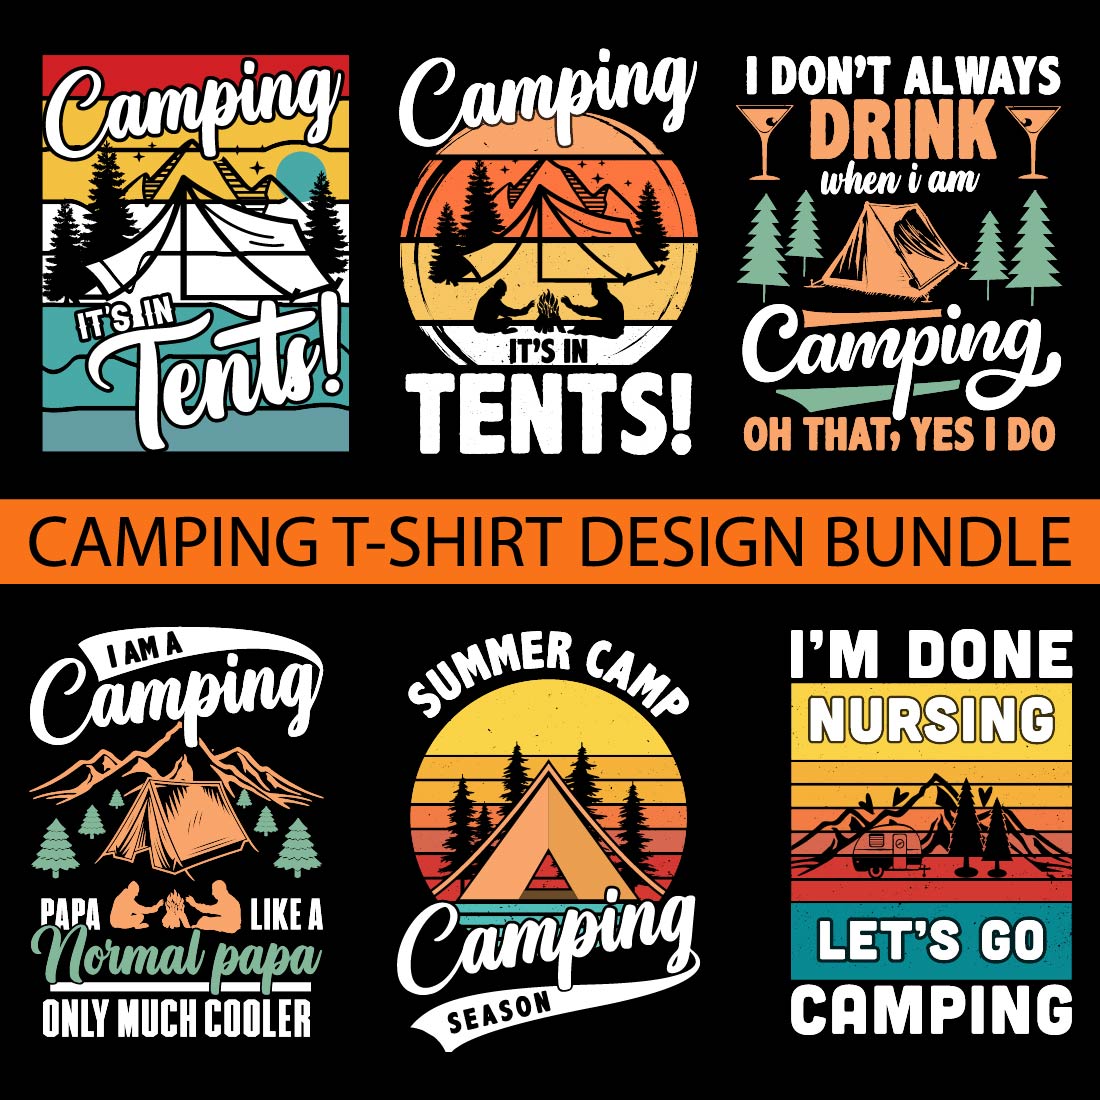 Camping lover t-shirt design free vector - MasterBundles